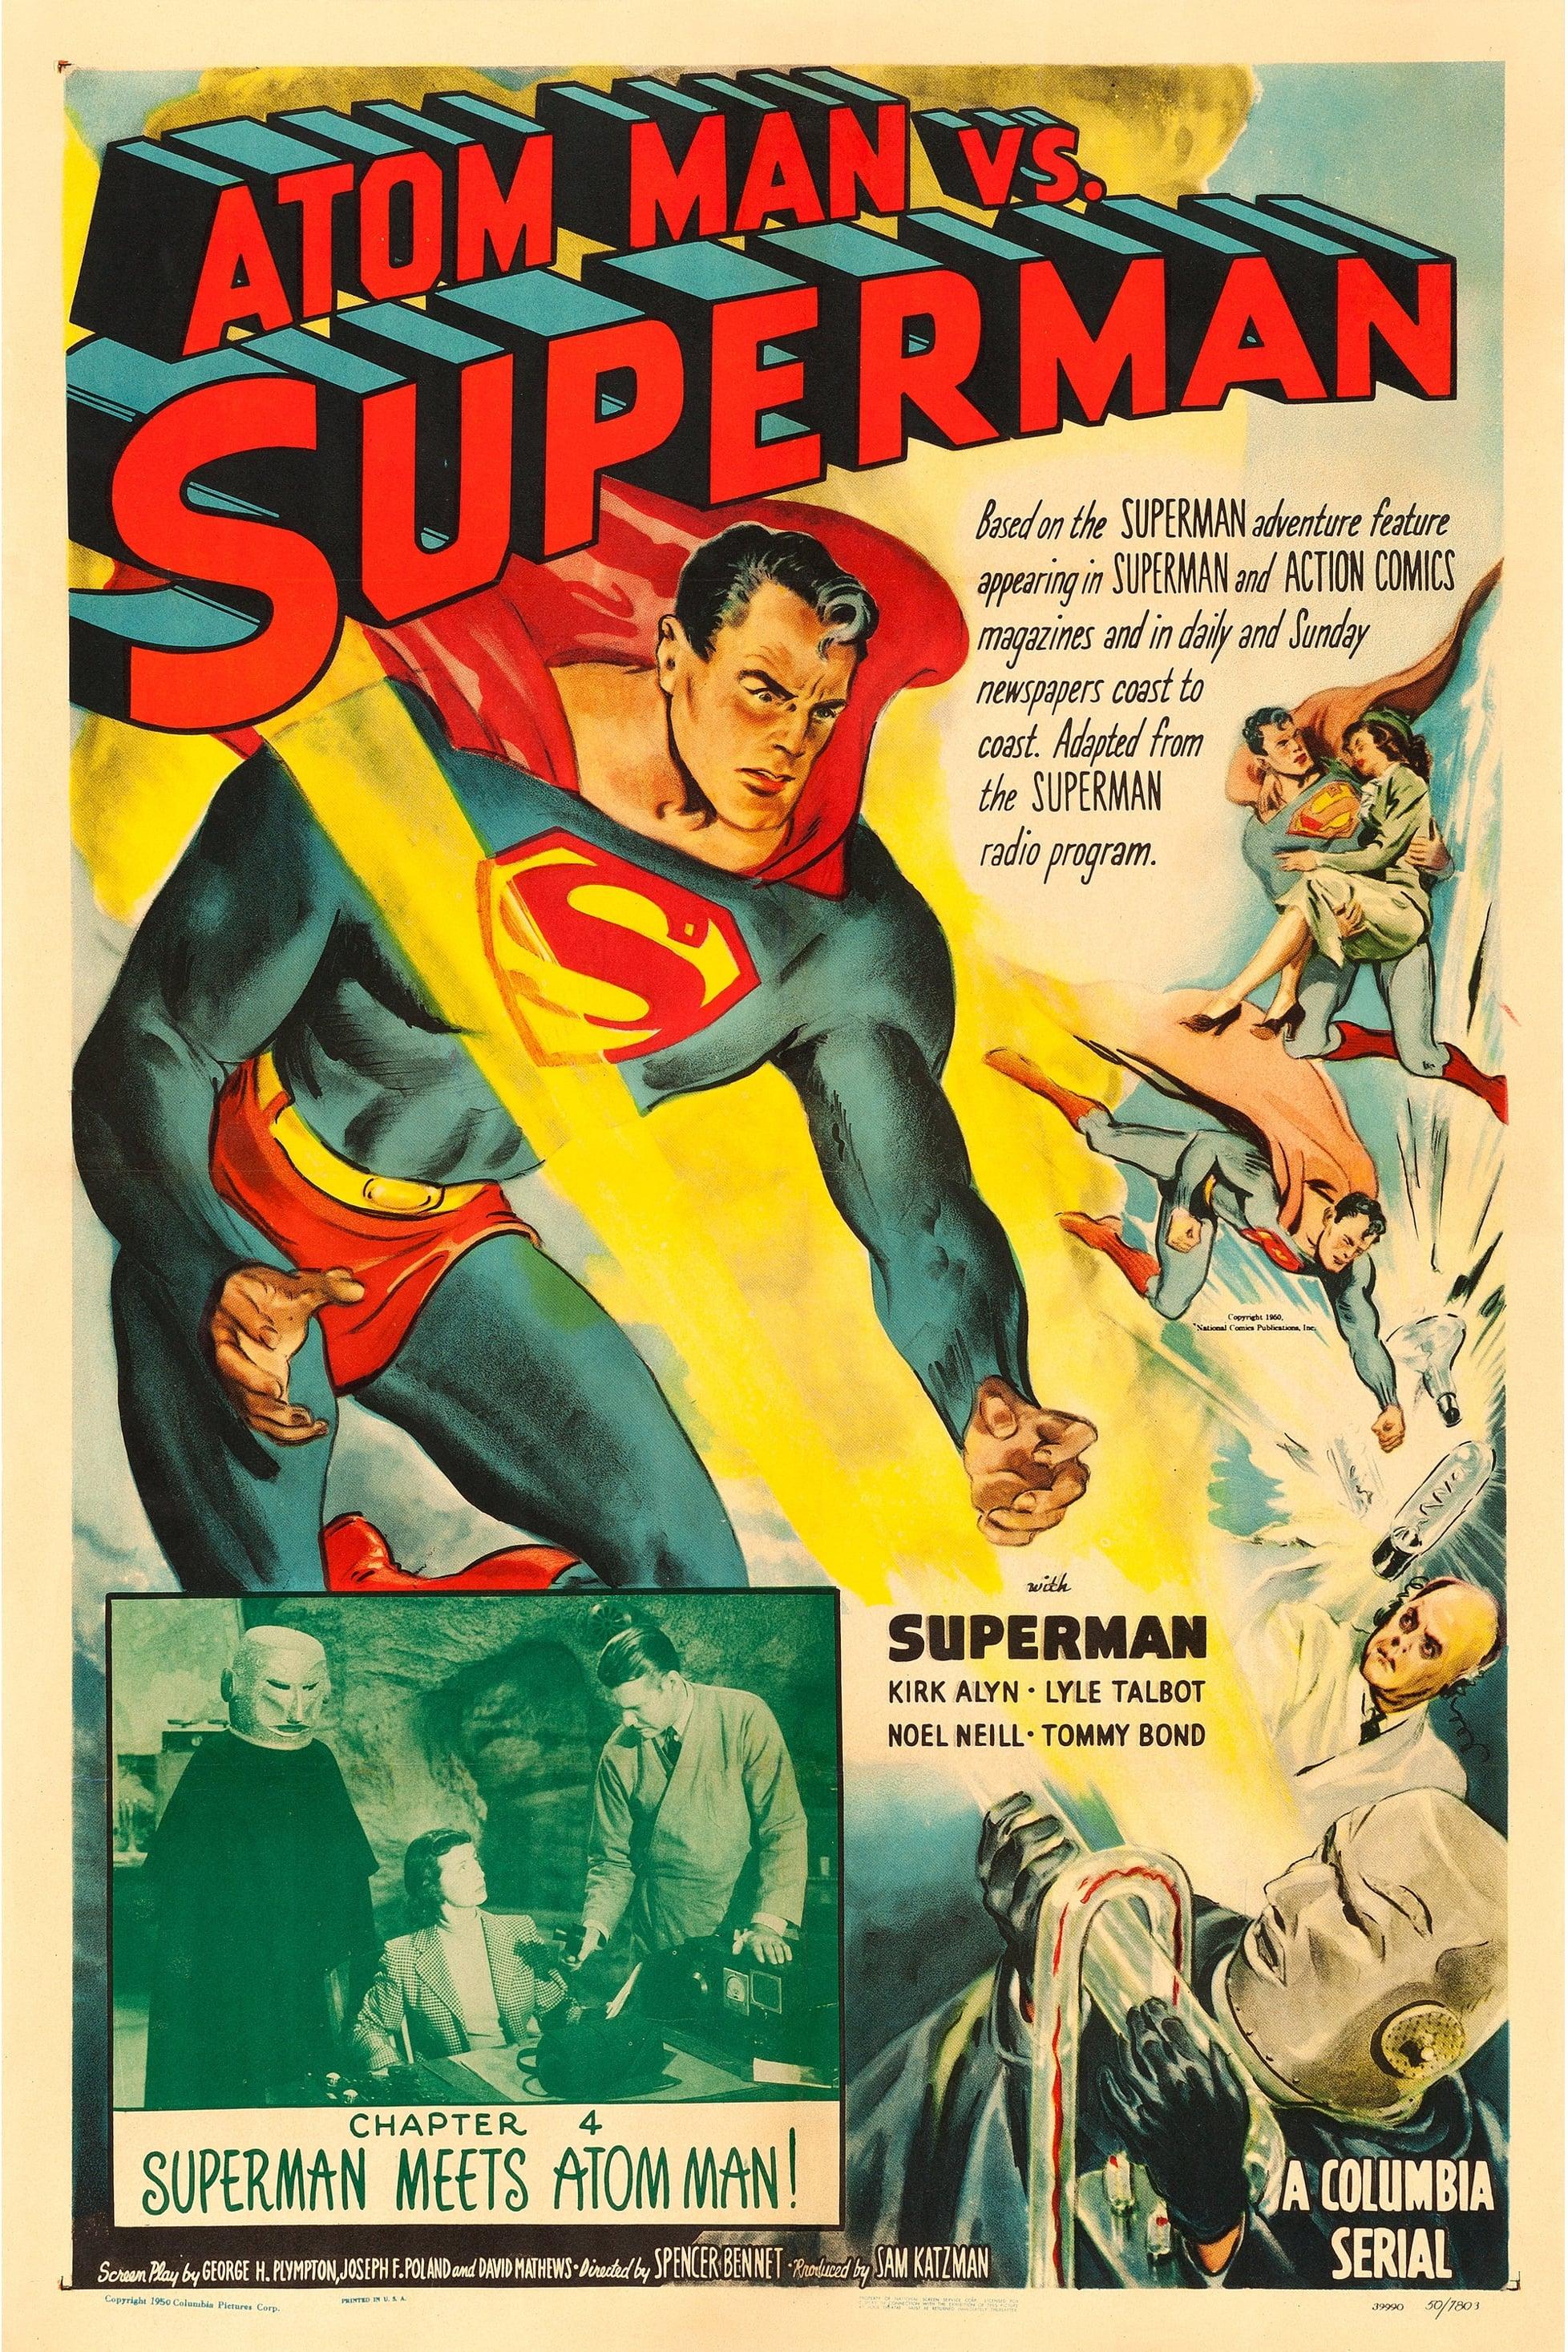 Atom Man vs. Superman poster